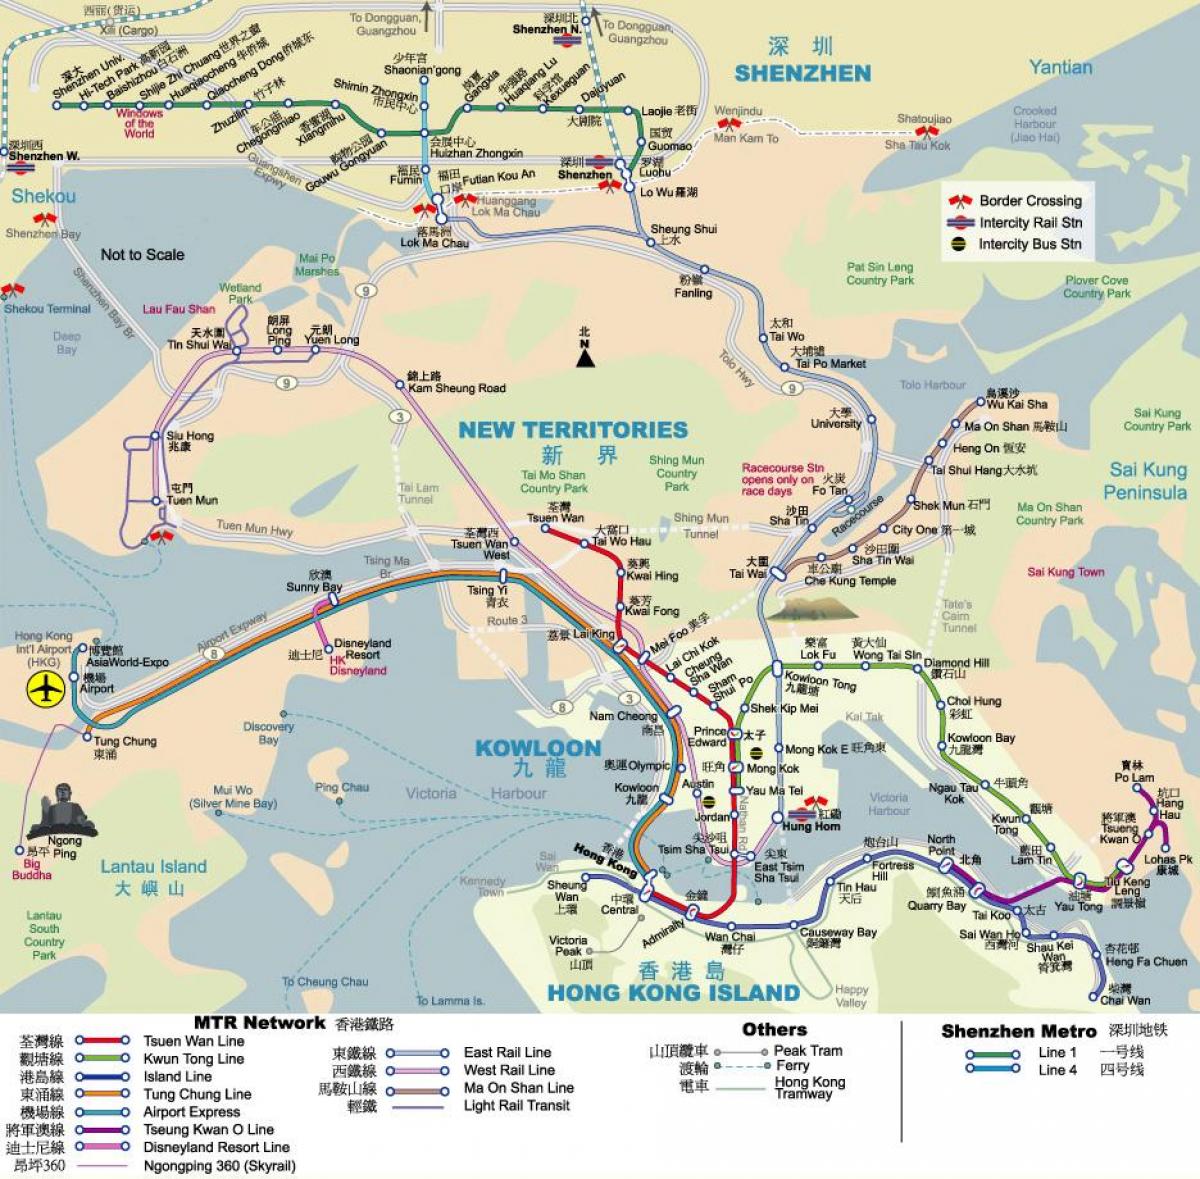 HK underground map